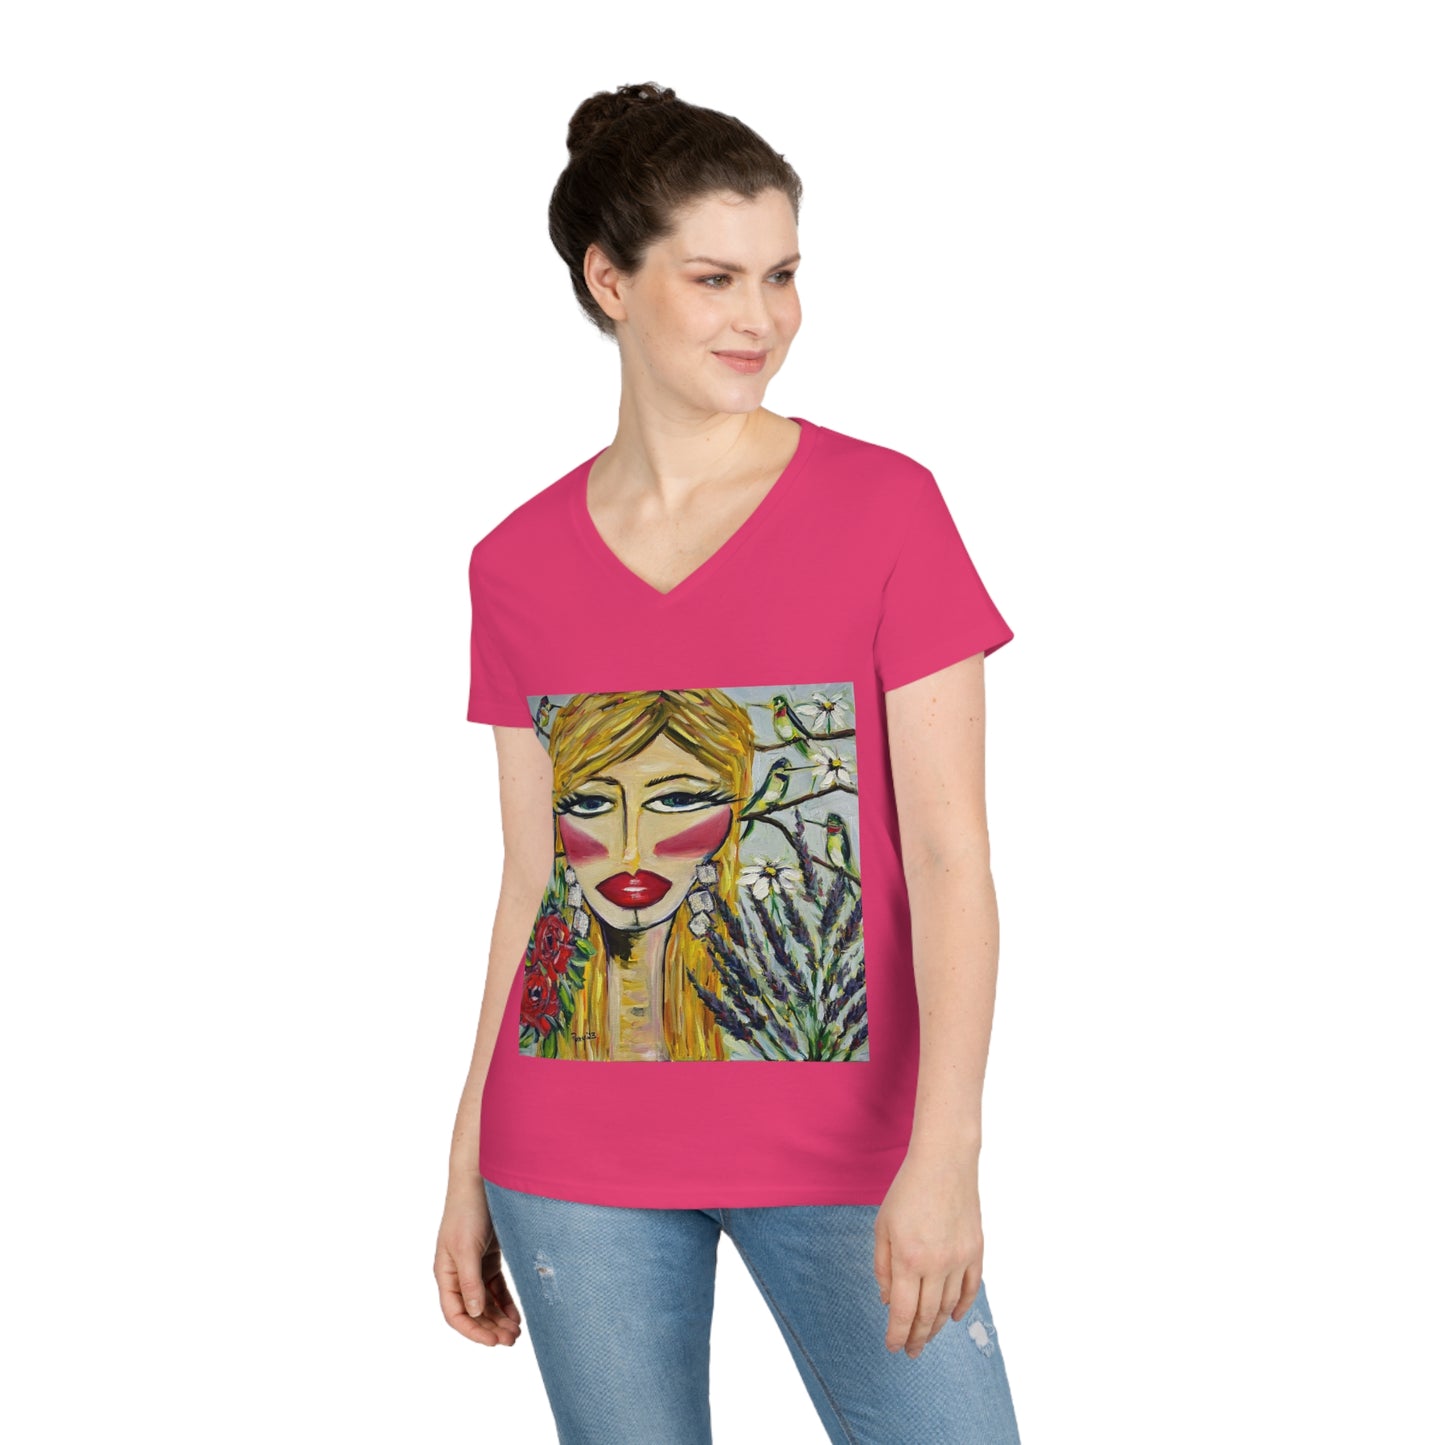 Hummingbird Lady Ladies' V-Neck T-Shirt